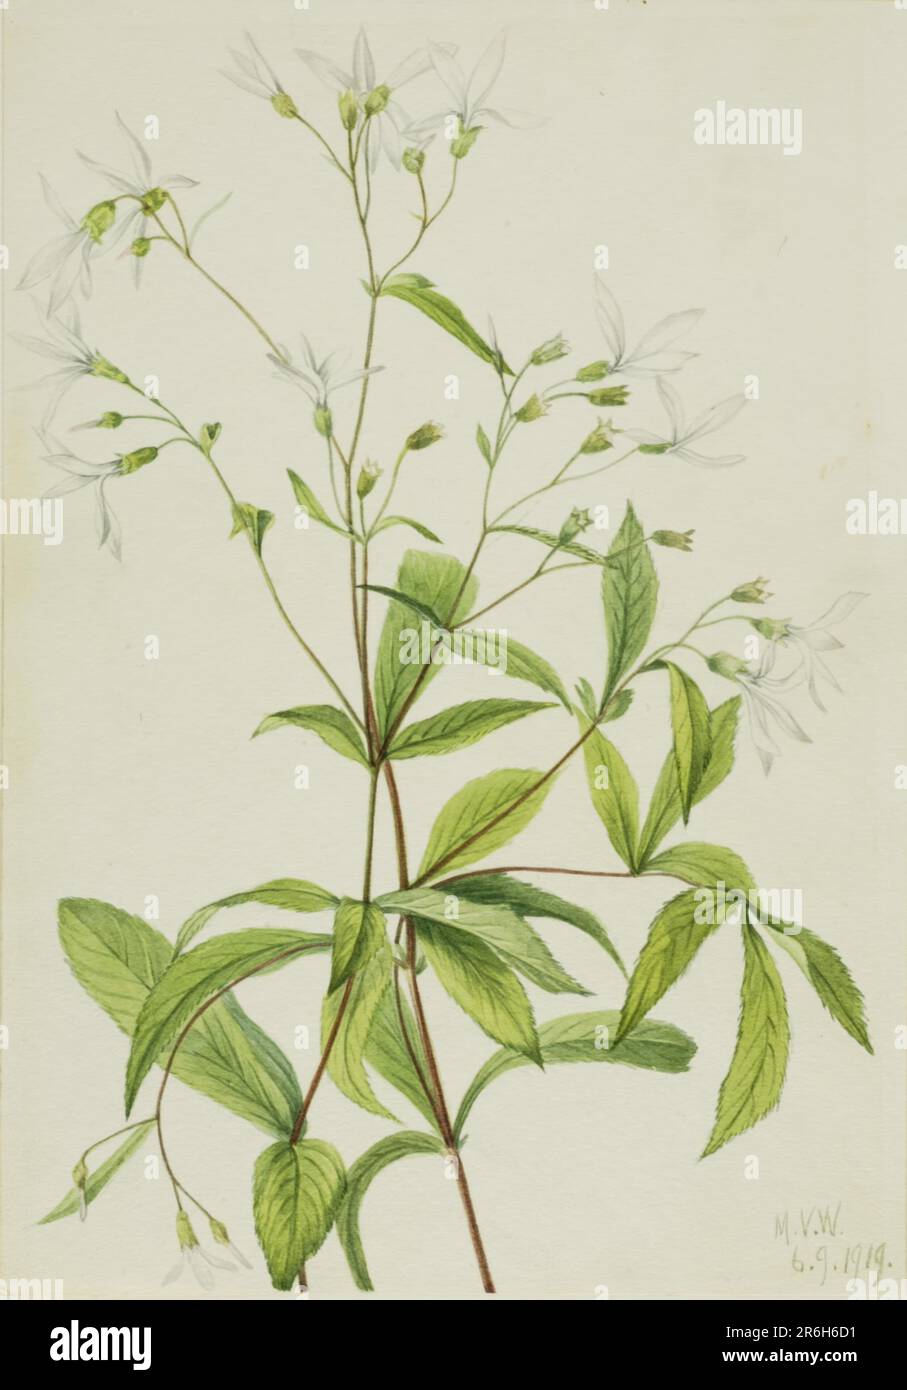 Bowmansroot (Porteranthus trifoliatus). Date: 1919. Watercolor on paper. Museum: Smithsonian American Art Museum. Stock Photo